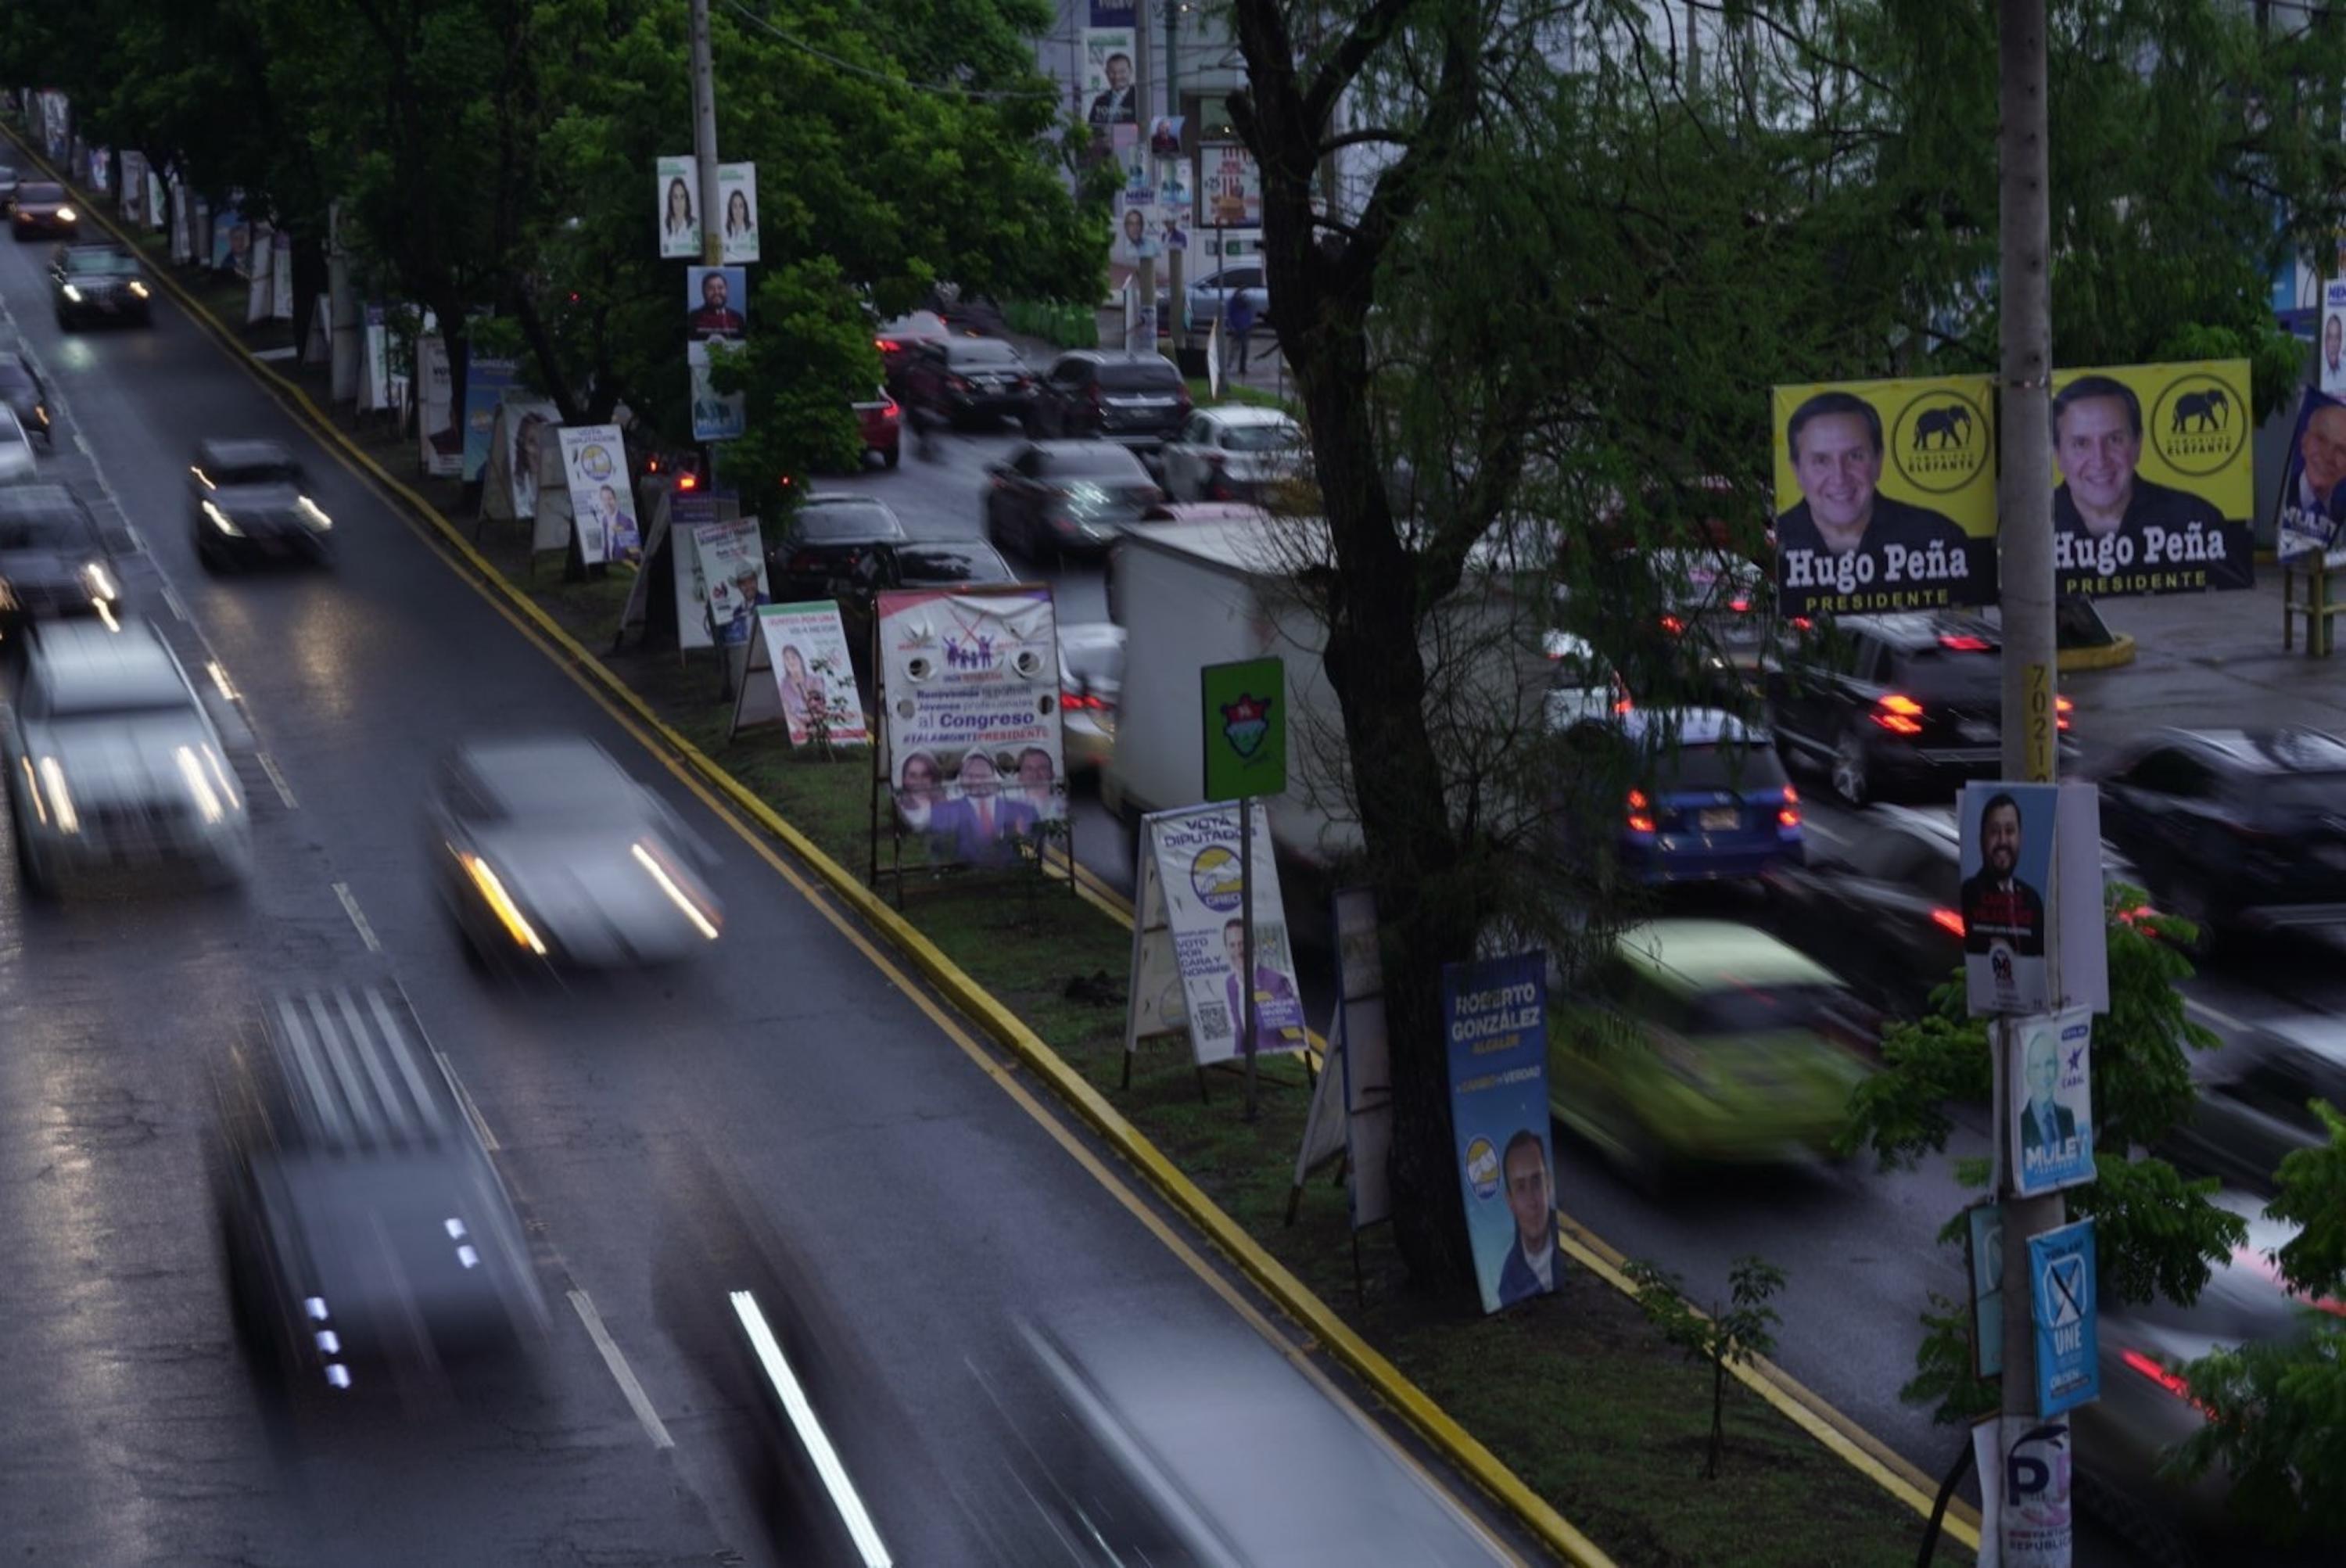 Campaign posters along Guatemala City